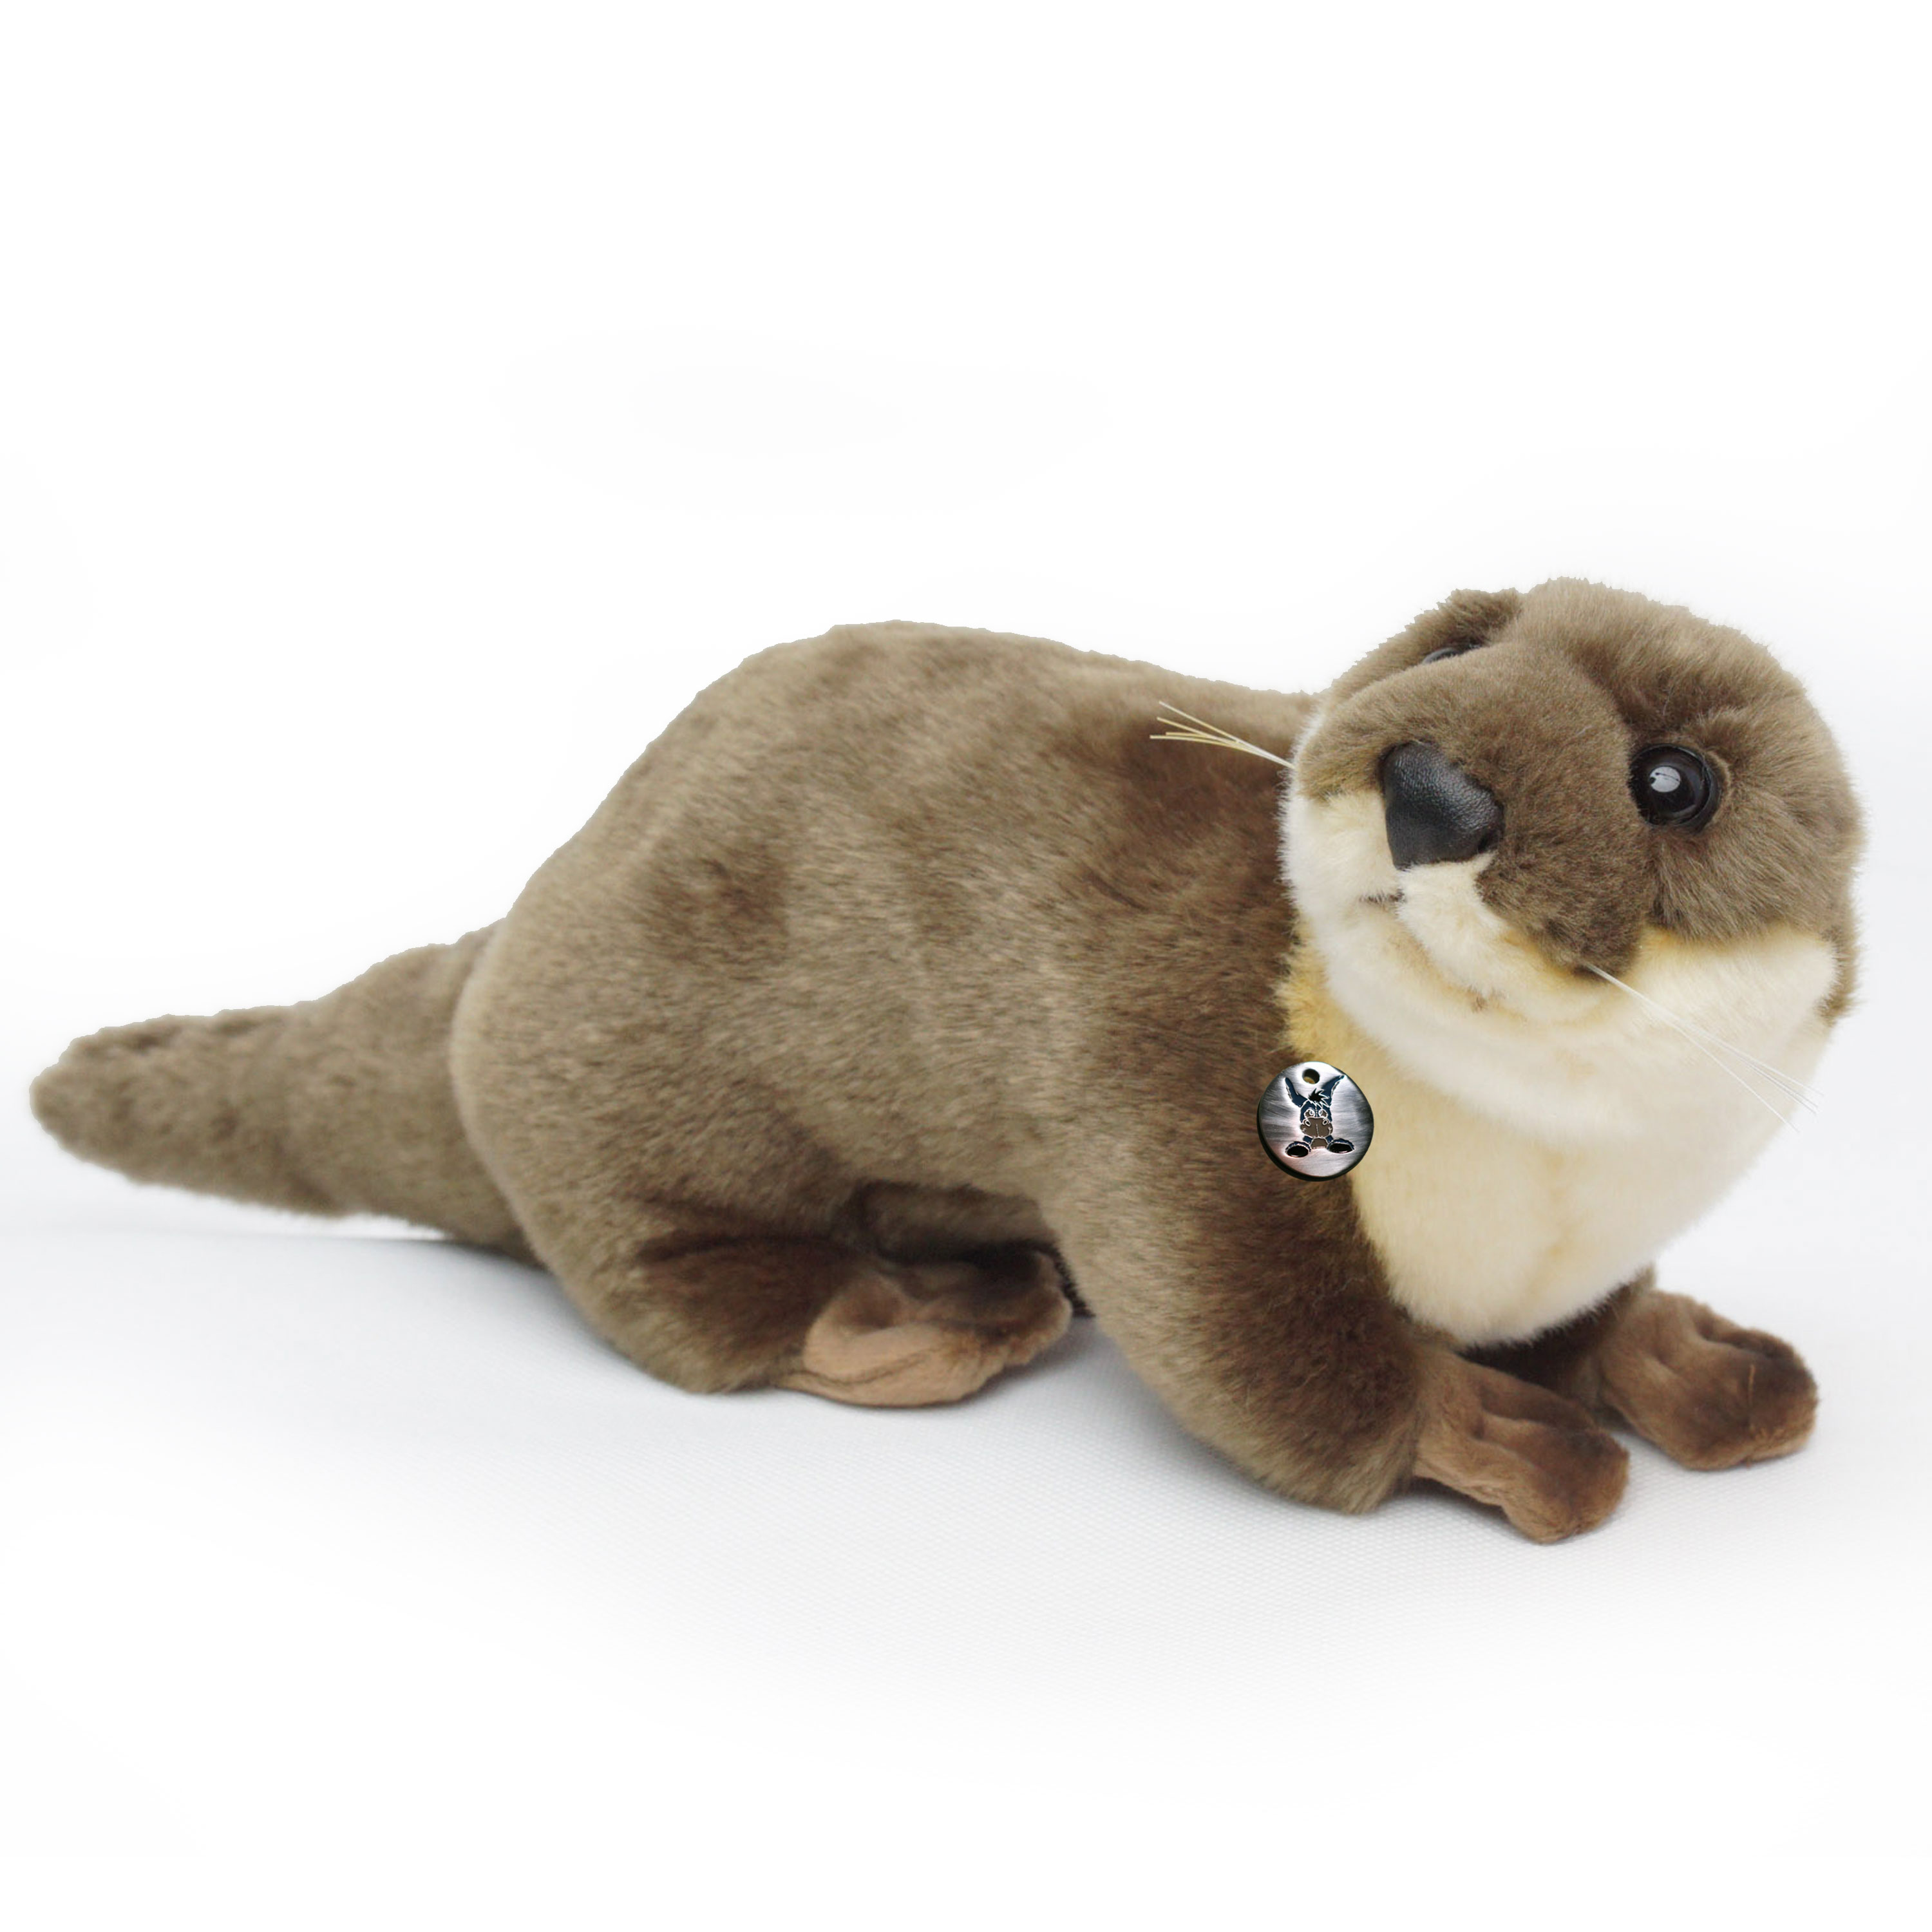 Uni Toys Otter Flussotter Kuscheltier Plüschtier Stofftier 